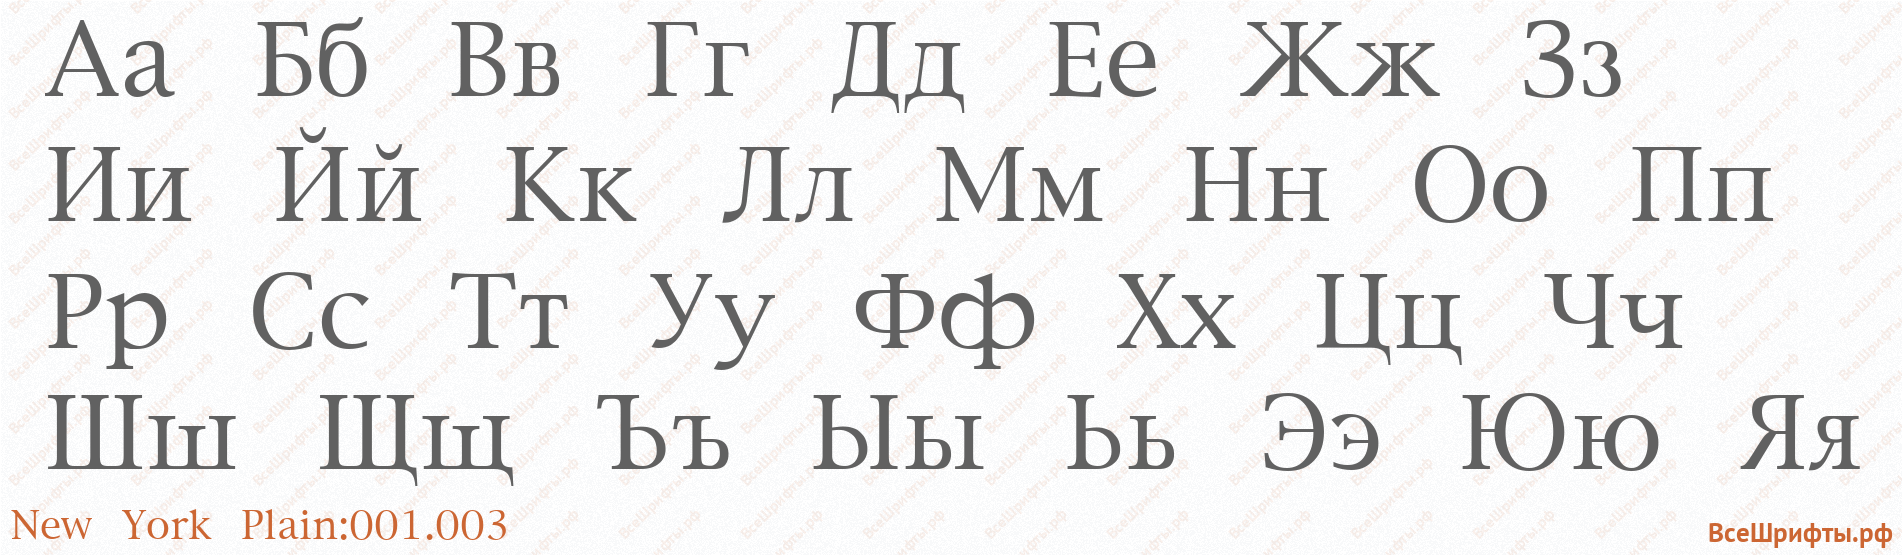 Шрифт New York Plain:001.003 с русскими буквами